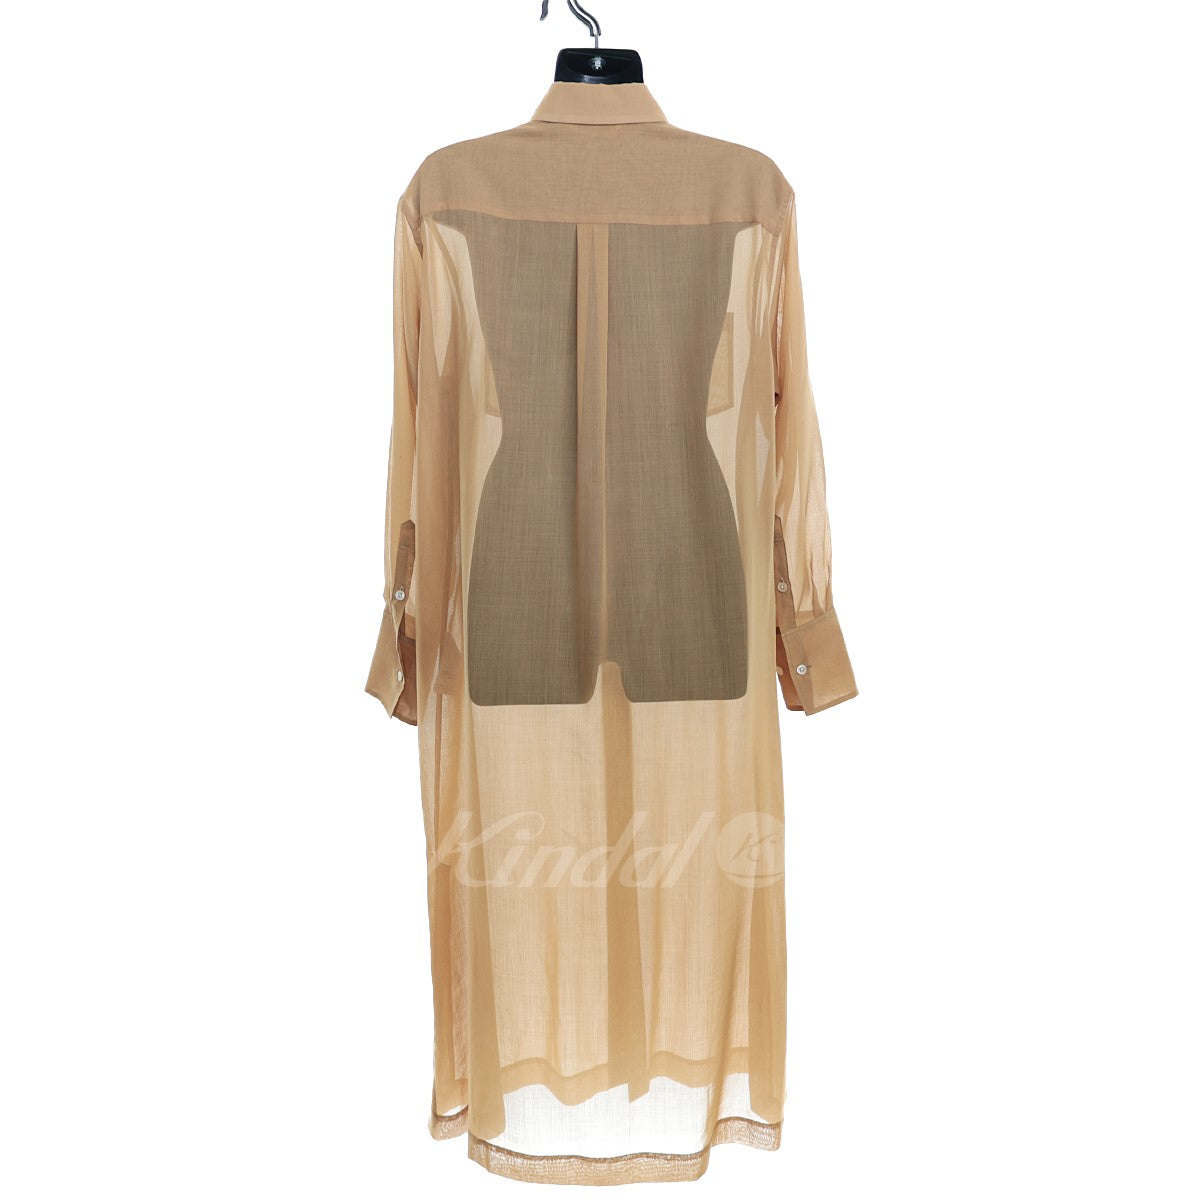 AURALEE(オーラリー) シャツワンピースWOOL Polyester SHEER CLOTH SHIRTS ONEPIECE ブラウン サイズ:0 レディース ワンピース 中古・古着